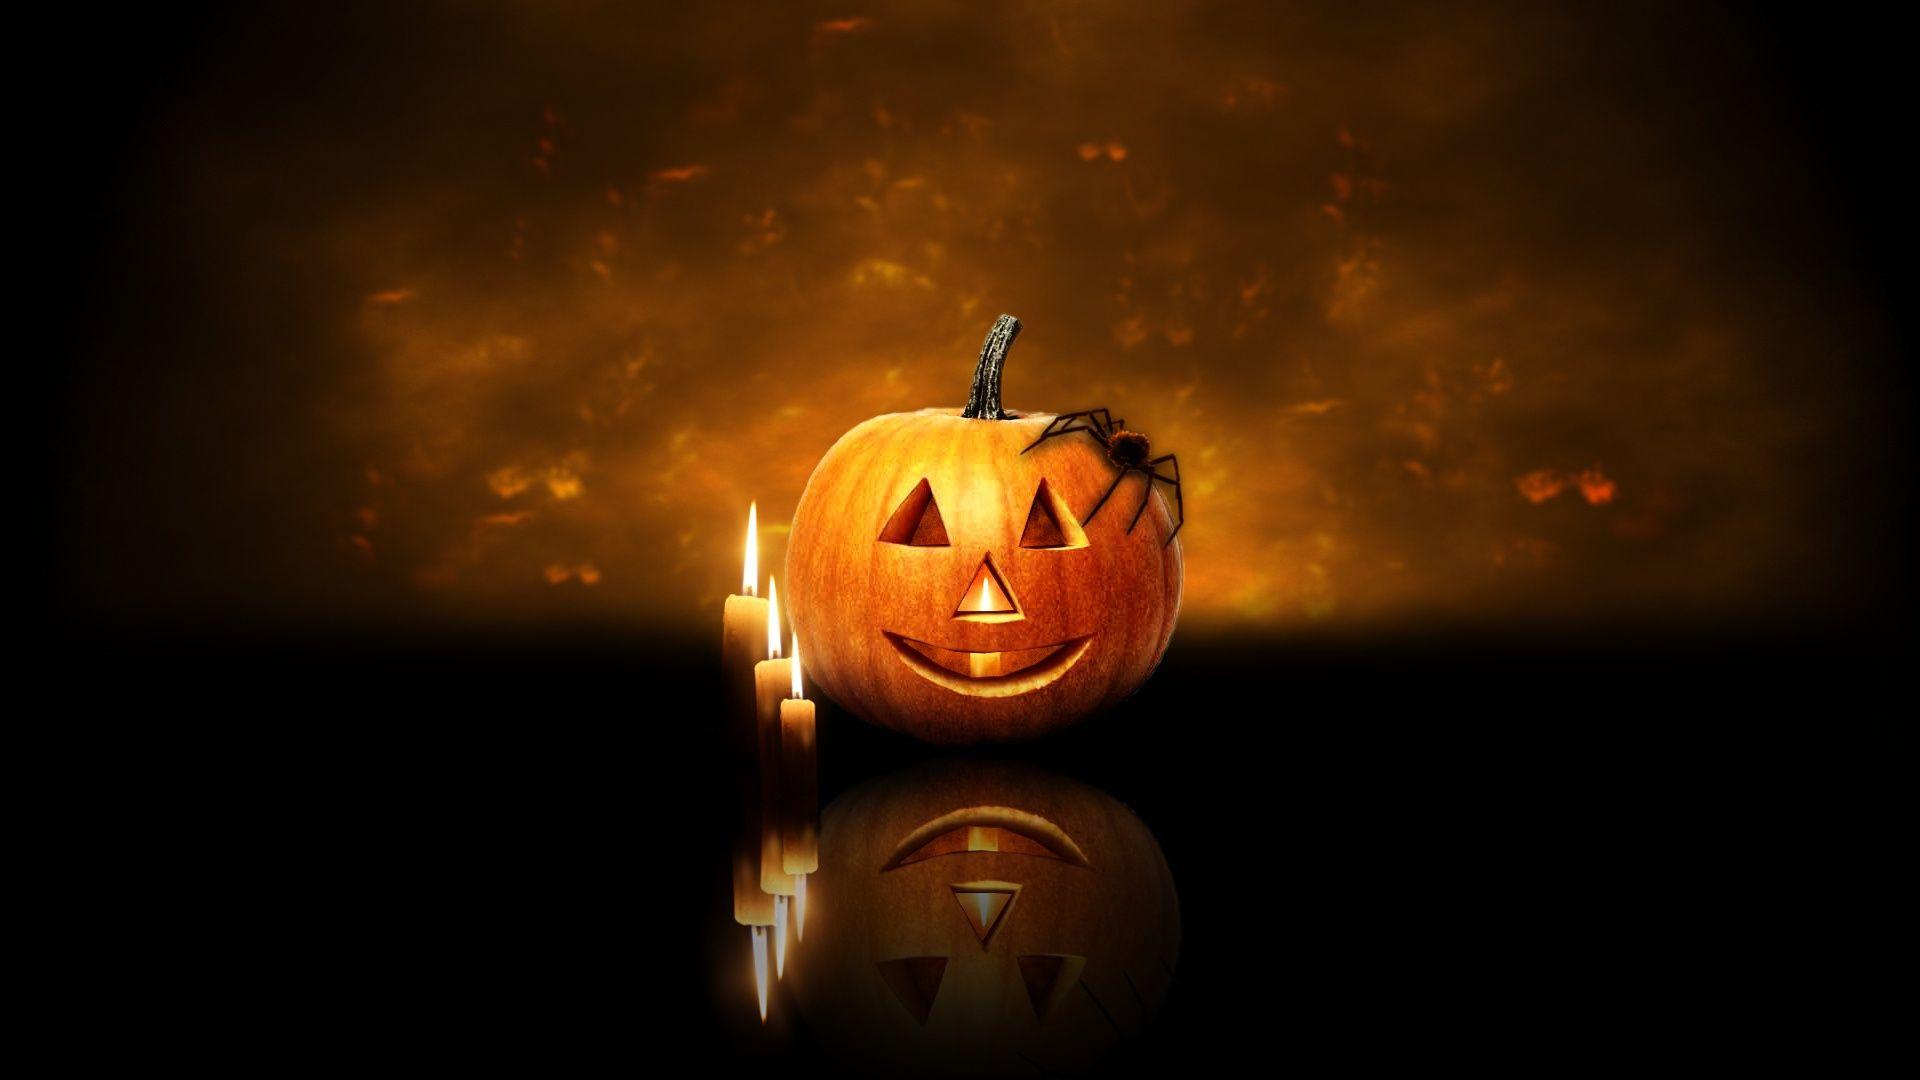 Halloween Pumpkin Candles Wallpaper in jpg format for free download